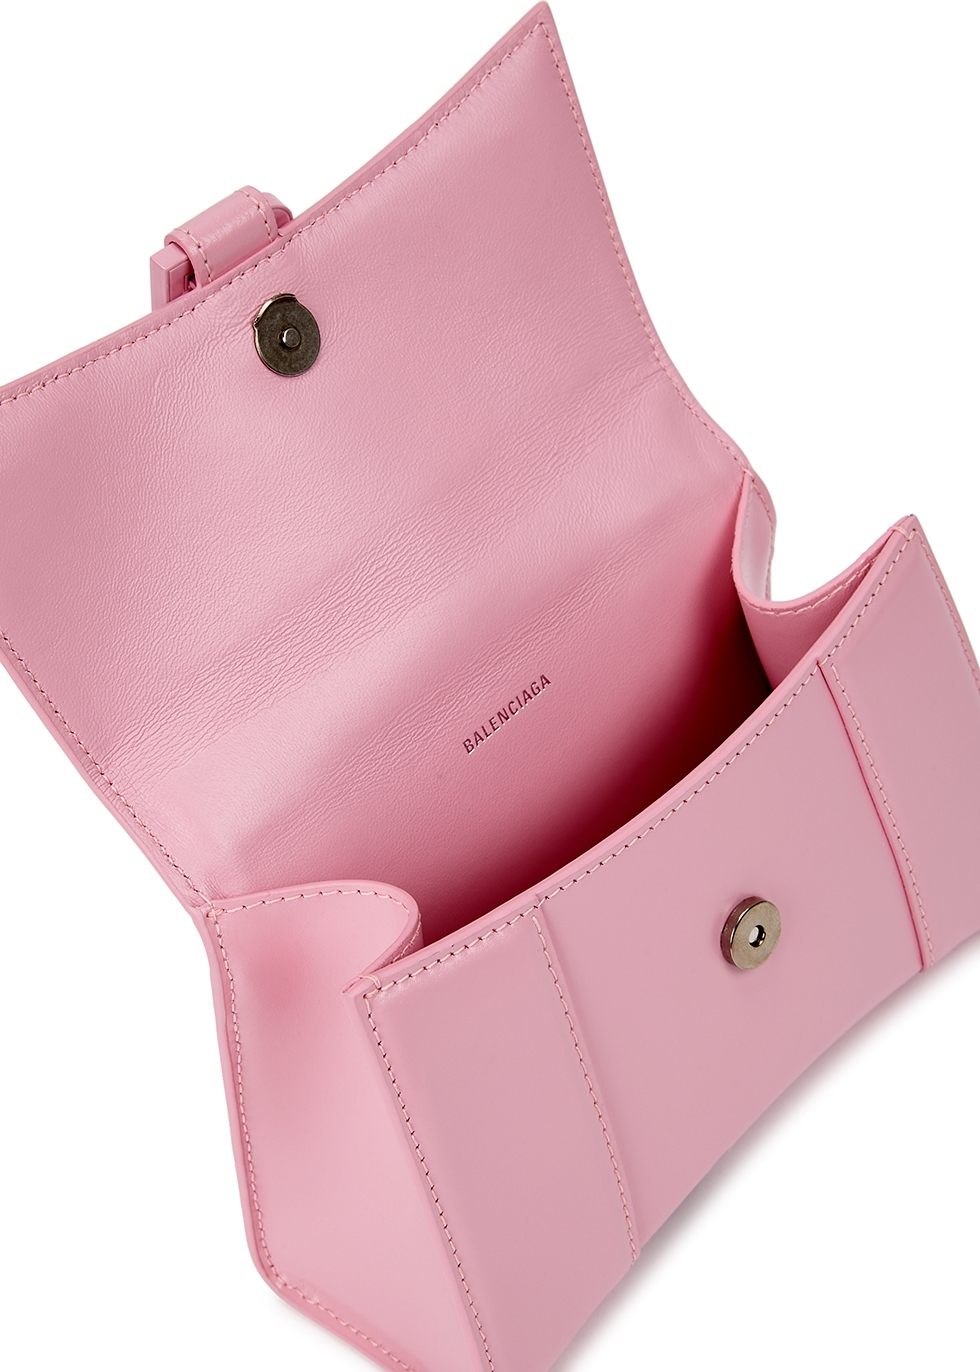 Balenciaga Hourglass XS pink leather top handle bag - Harvey Nichols